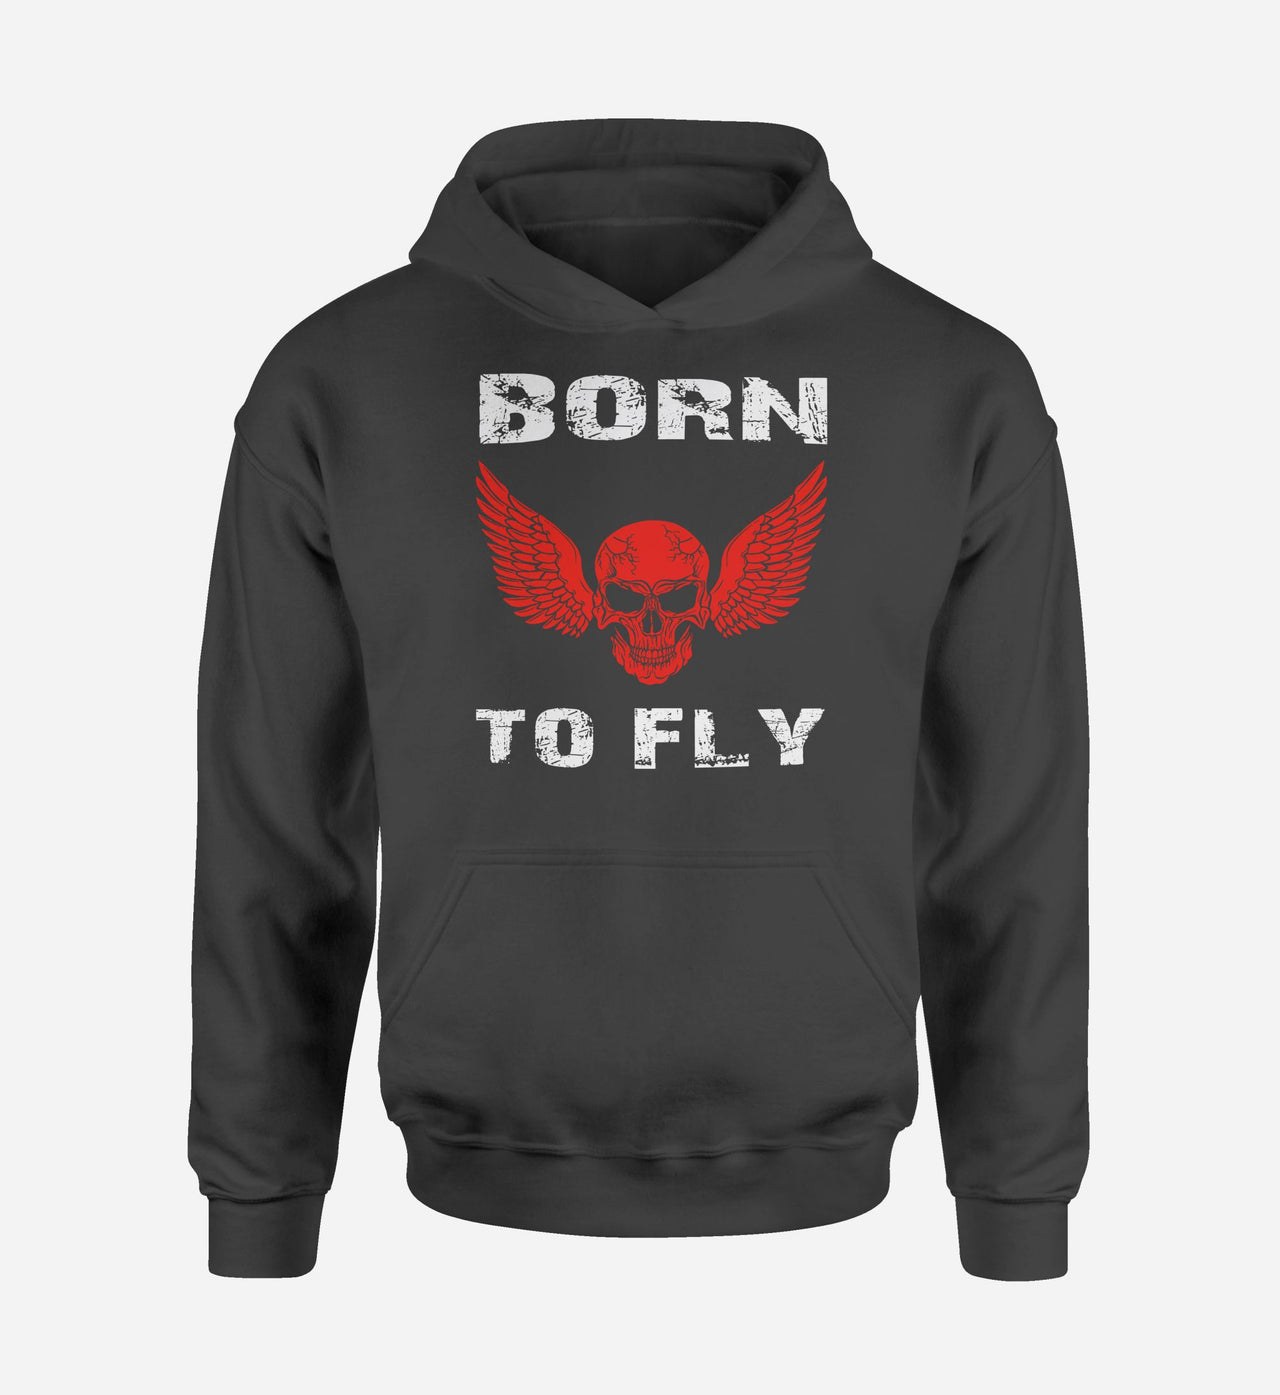 Born To Fly SKELETON Designed Hoodies